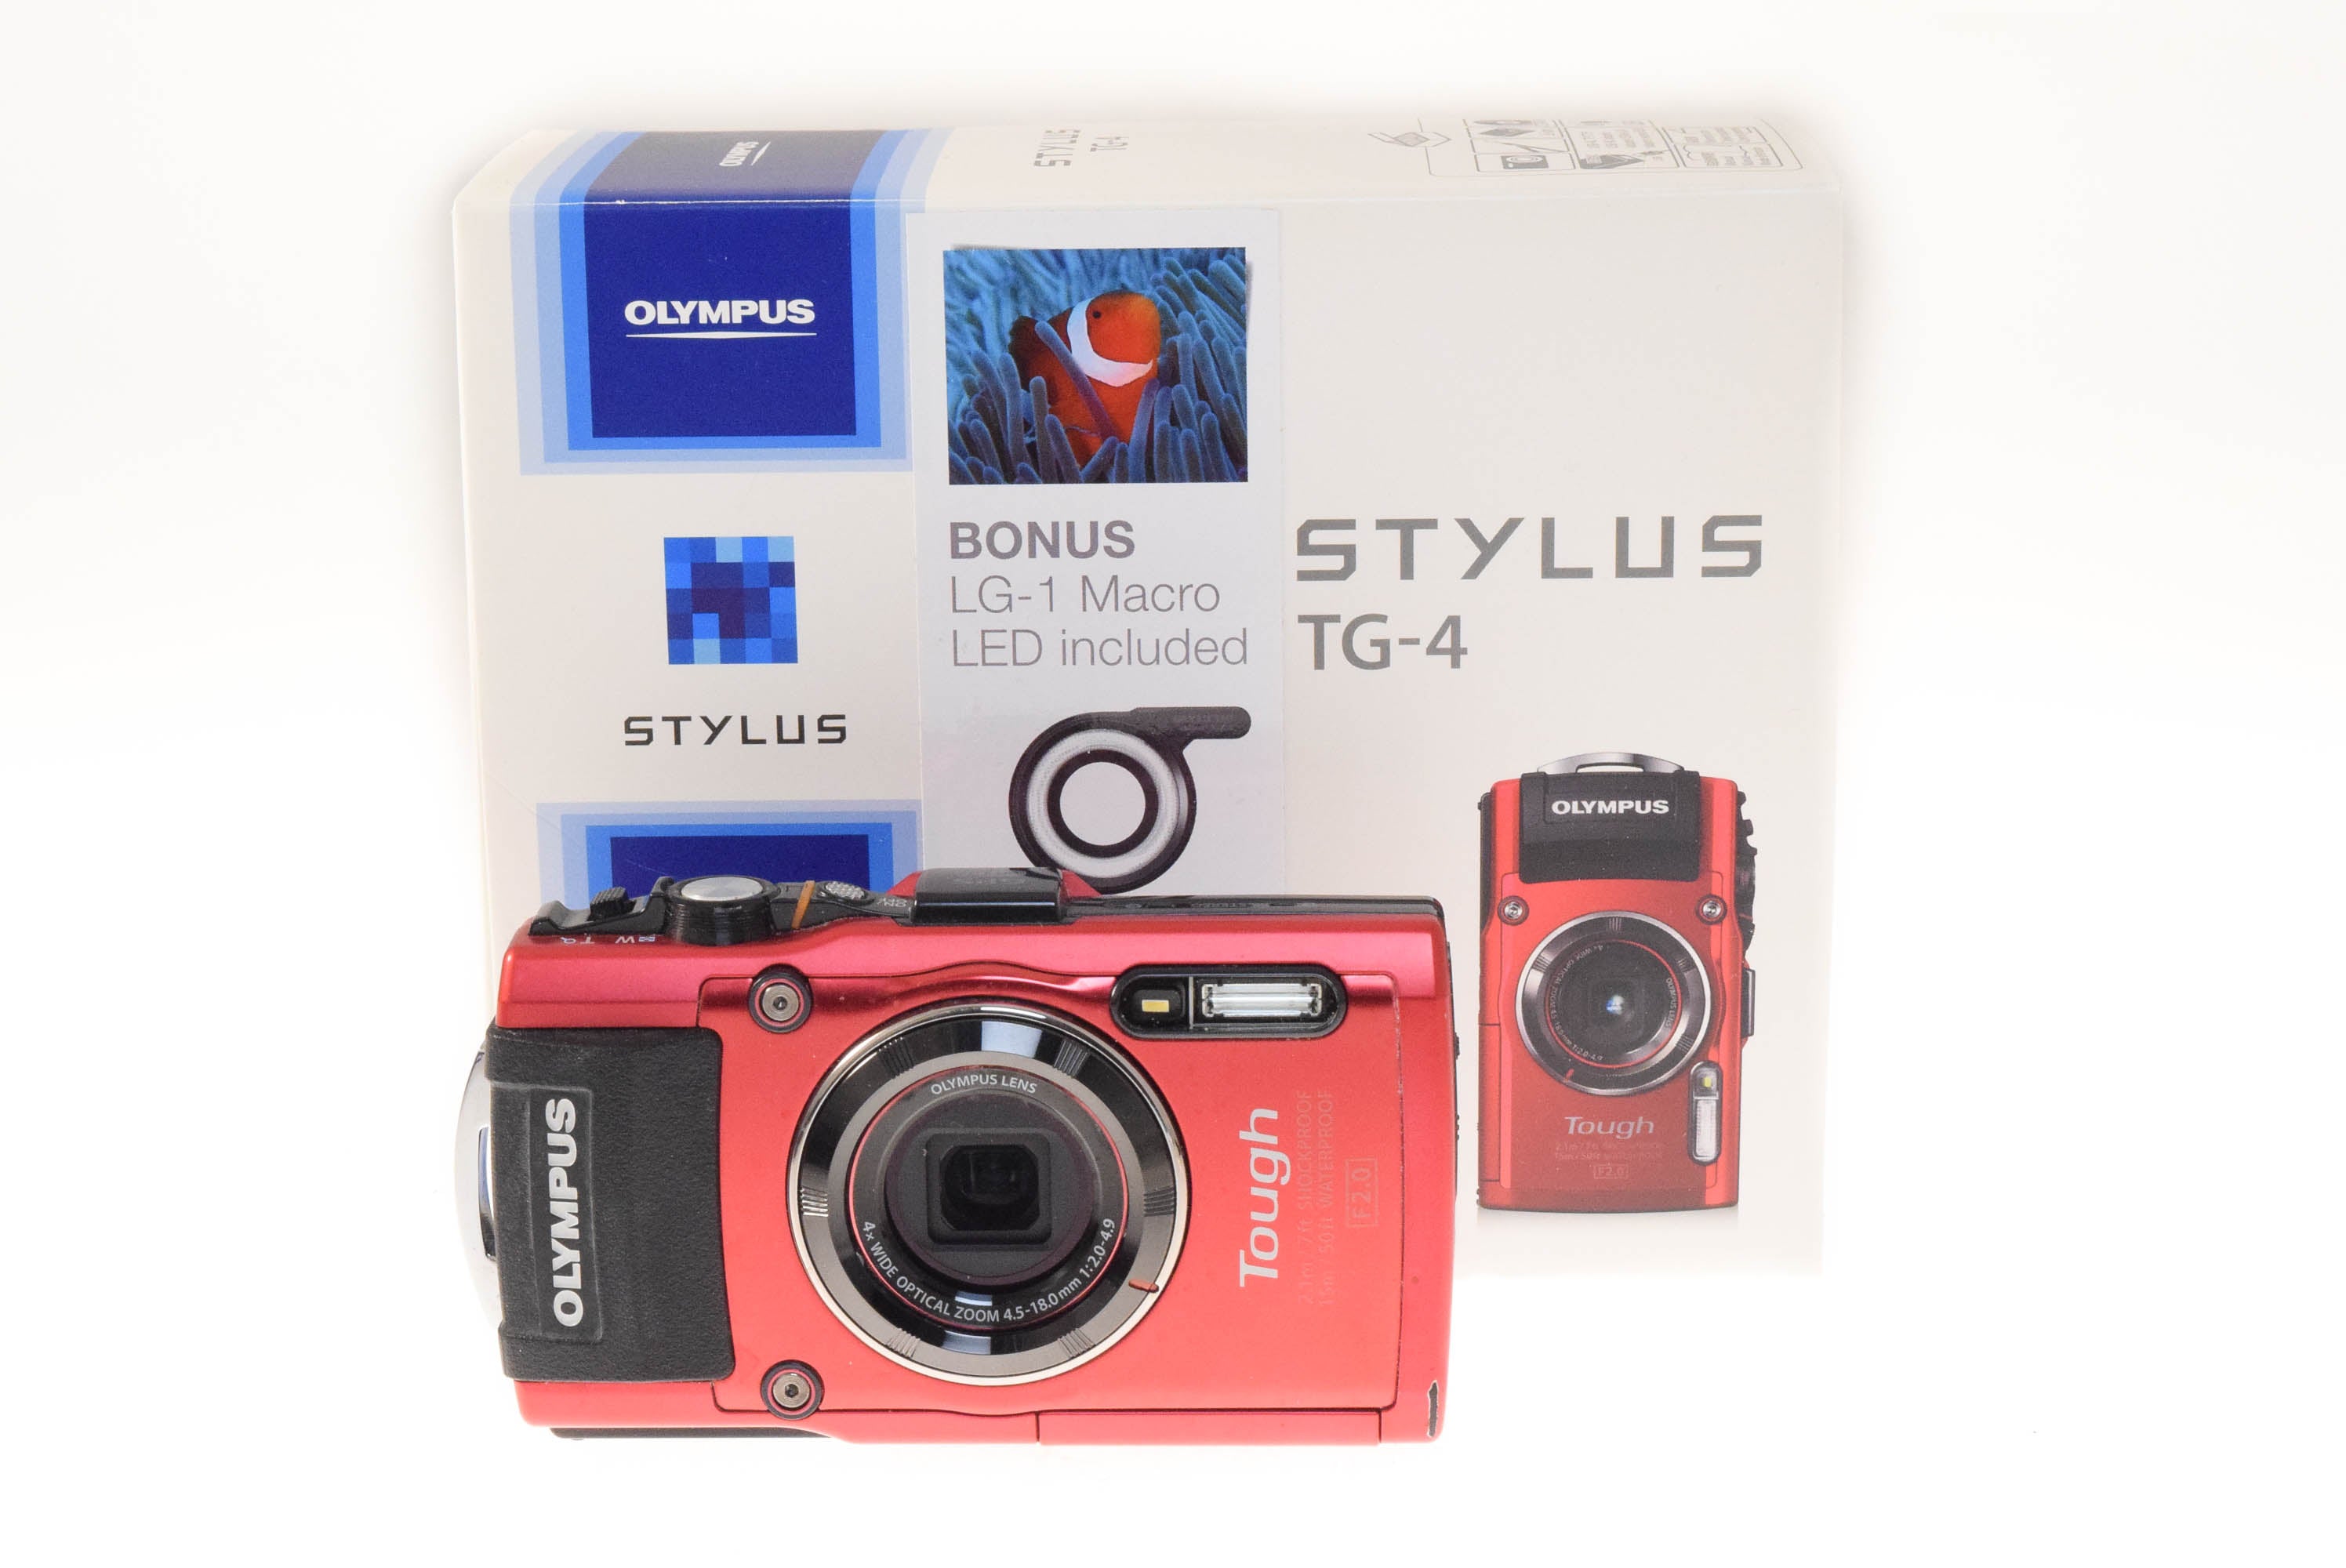 OLYMPUS デジタルカメラ STYLUS TG-4 Tough レッド 1600万画素CMOS F2